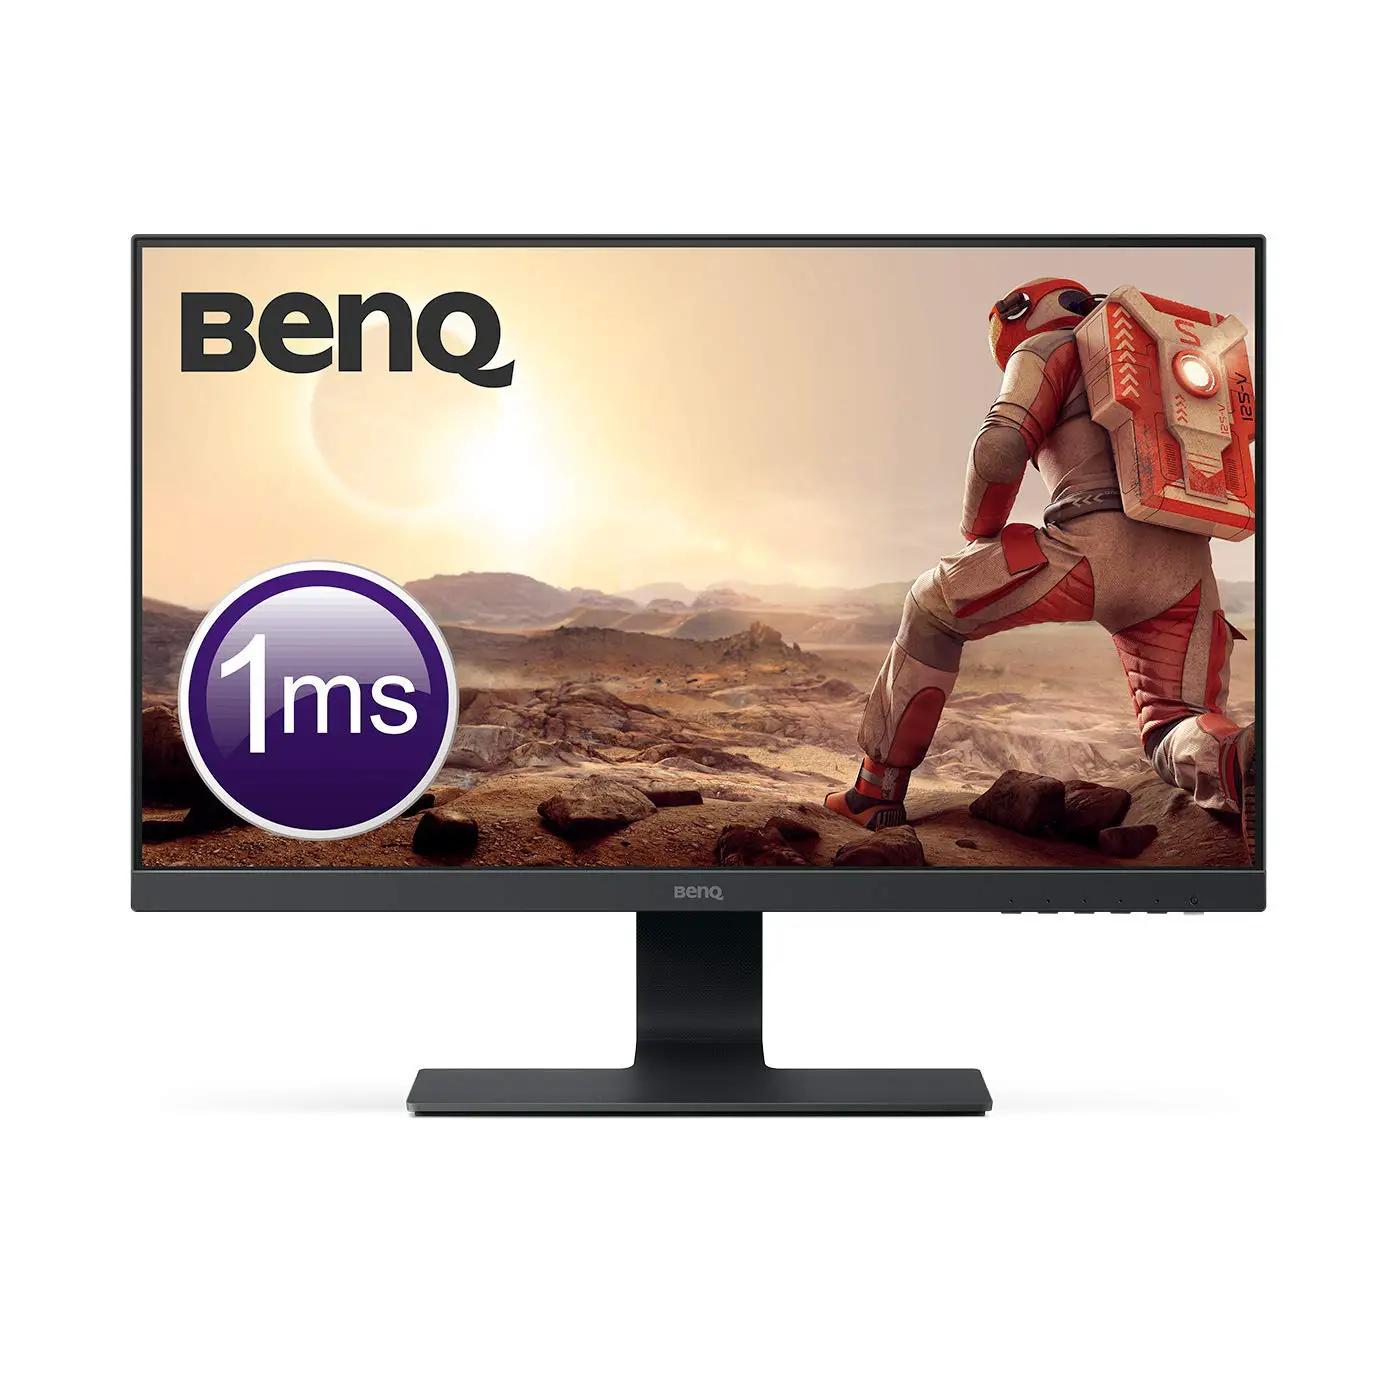 BenQ GL2580H - PS4 Monitor Produktbild